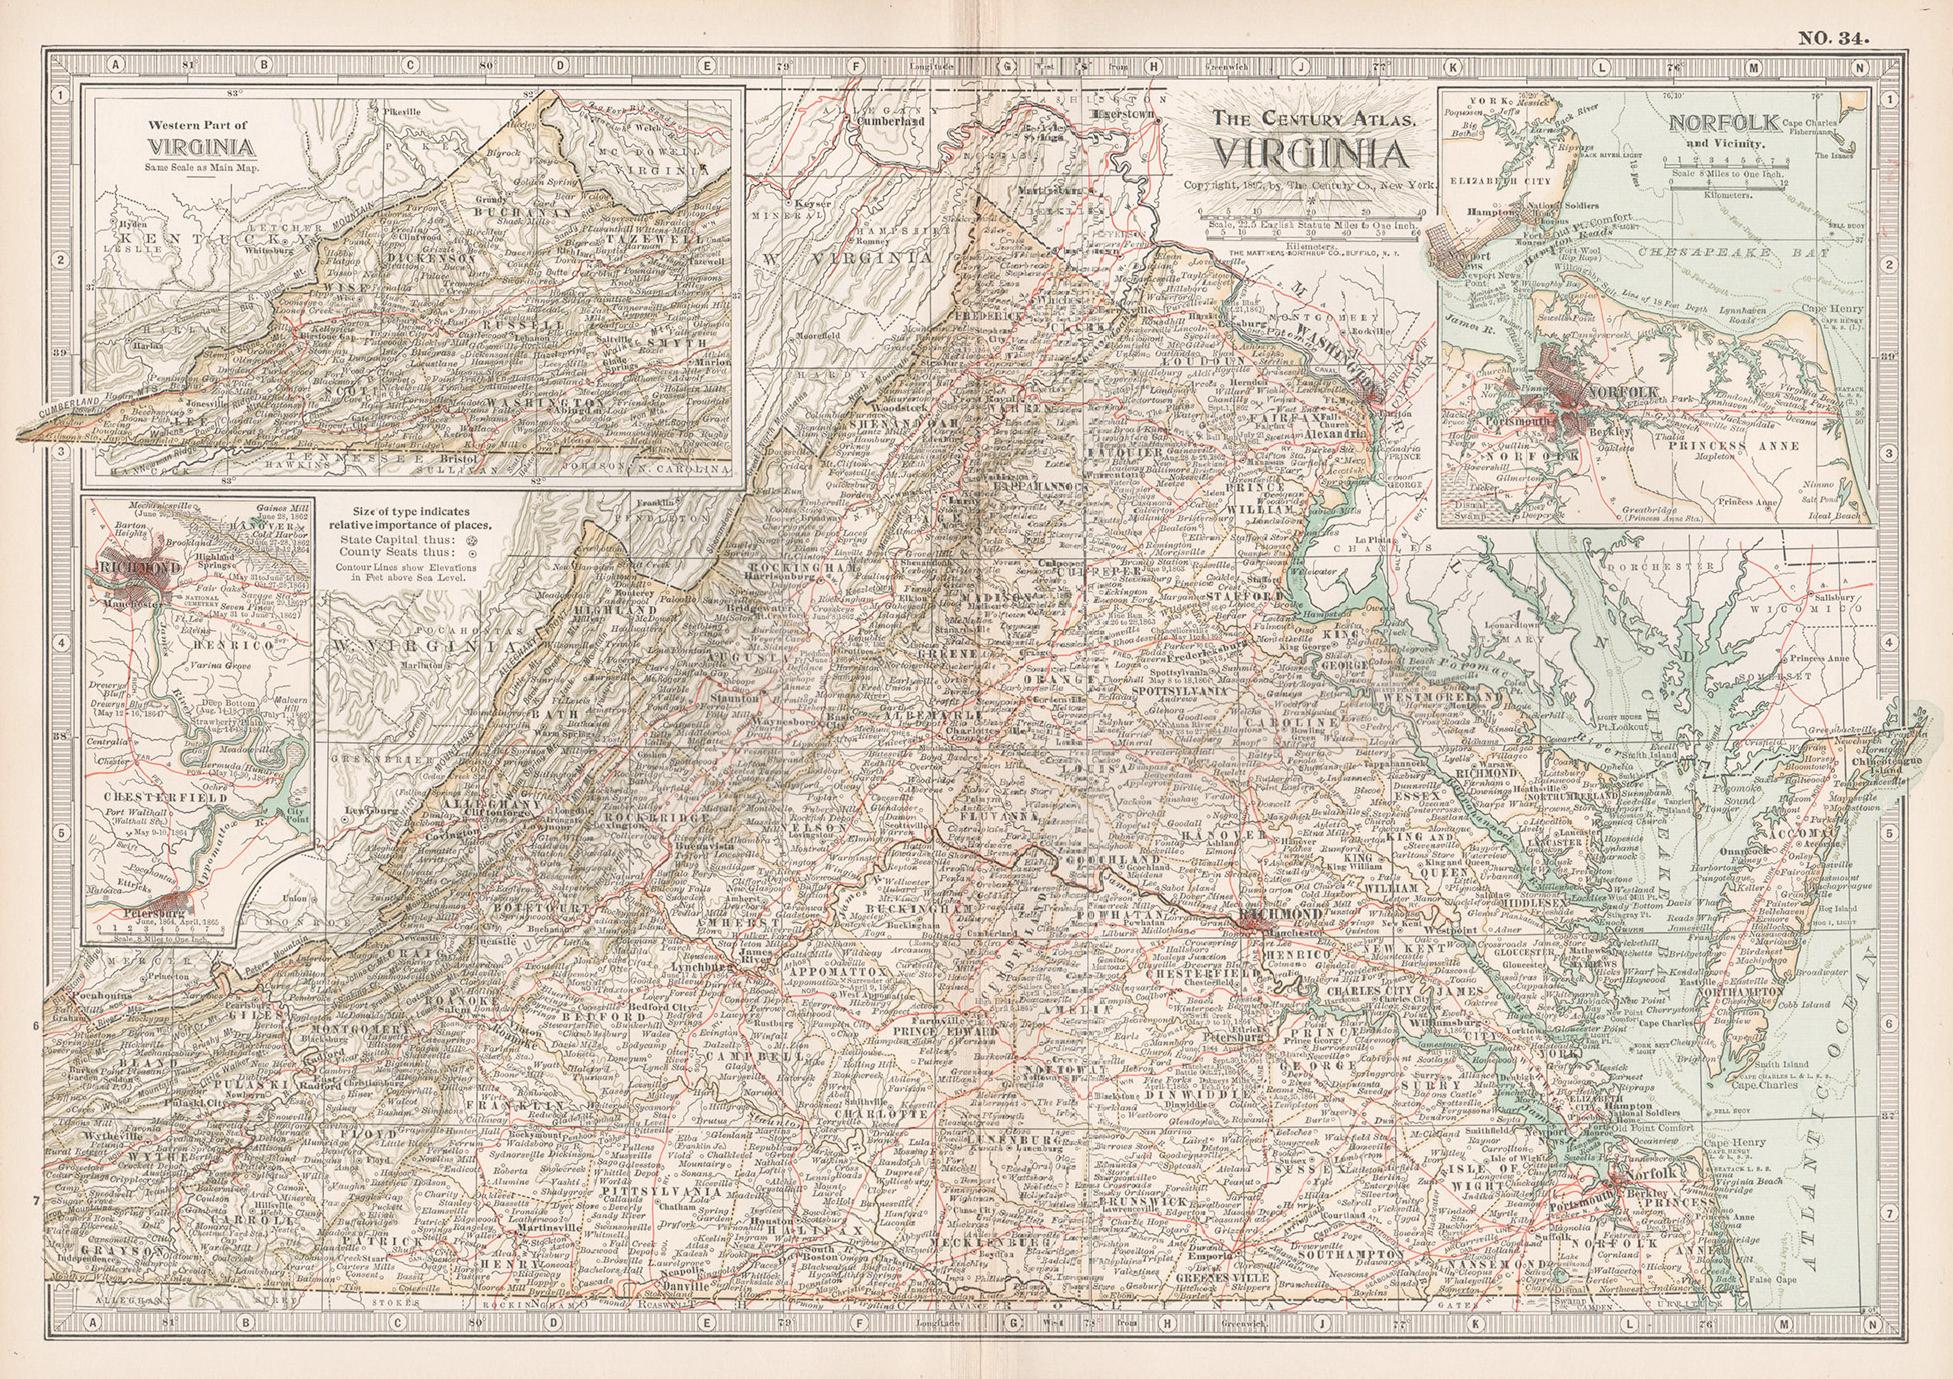 Virginia. USA. Century Atlas state antique vintage map